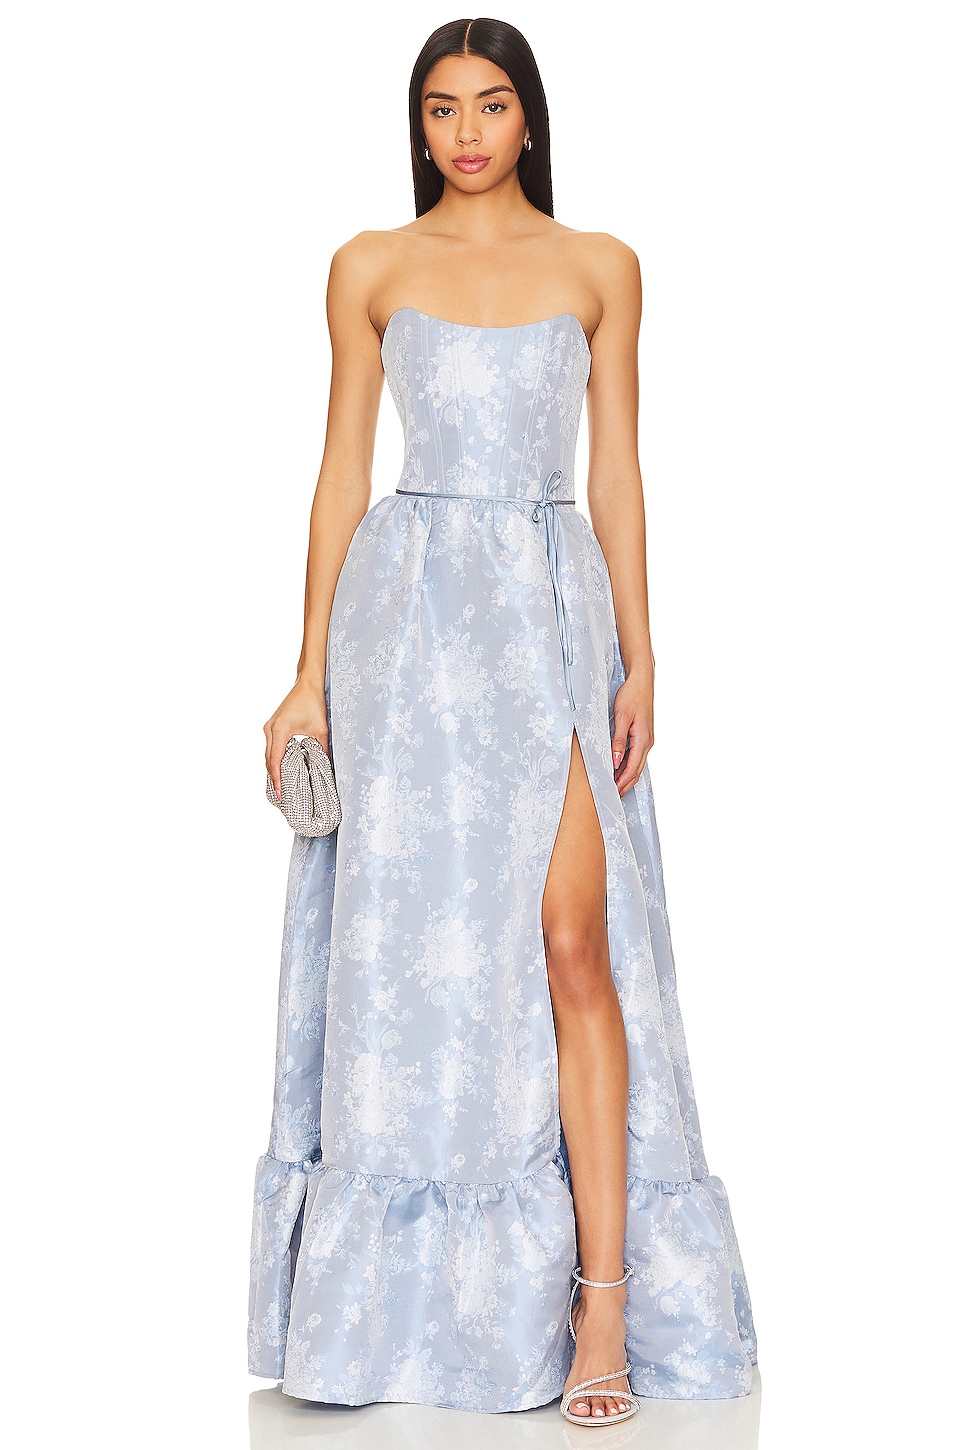 The Jolie Dress in Provencal Blue Floral – V. Chapman